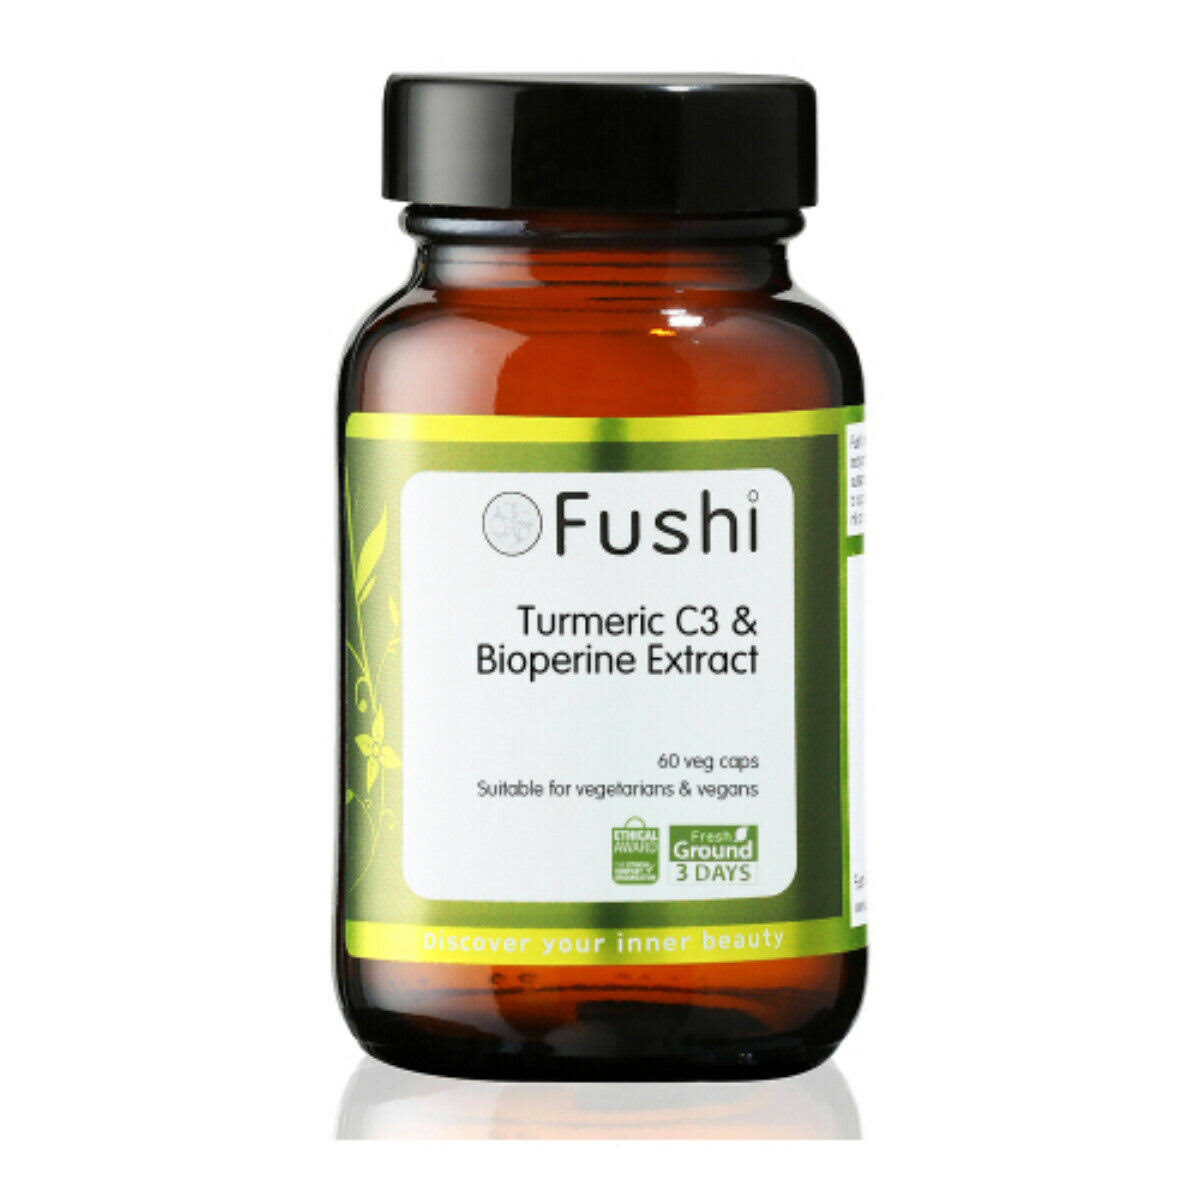 Fushi Turmeric C3 & Bioperine Extract 60 Caps